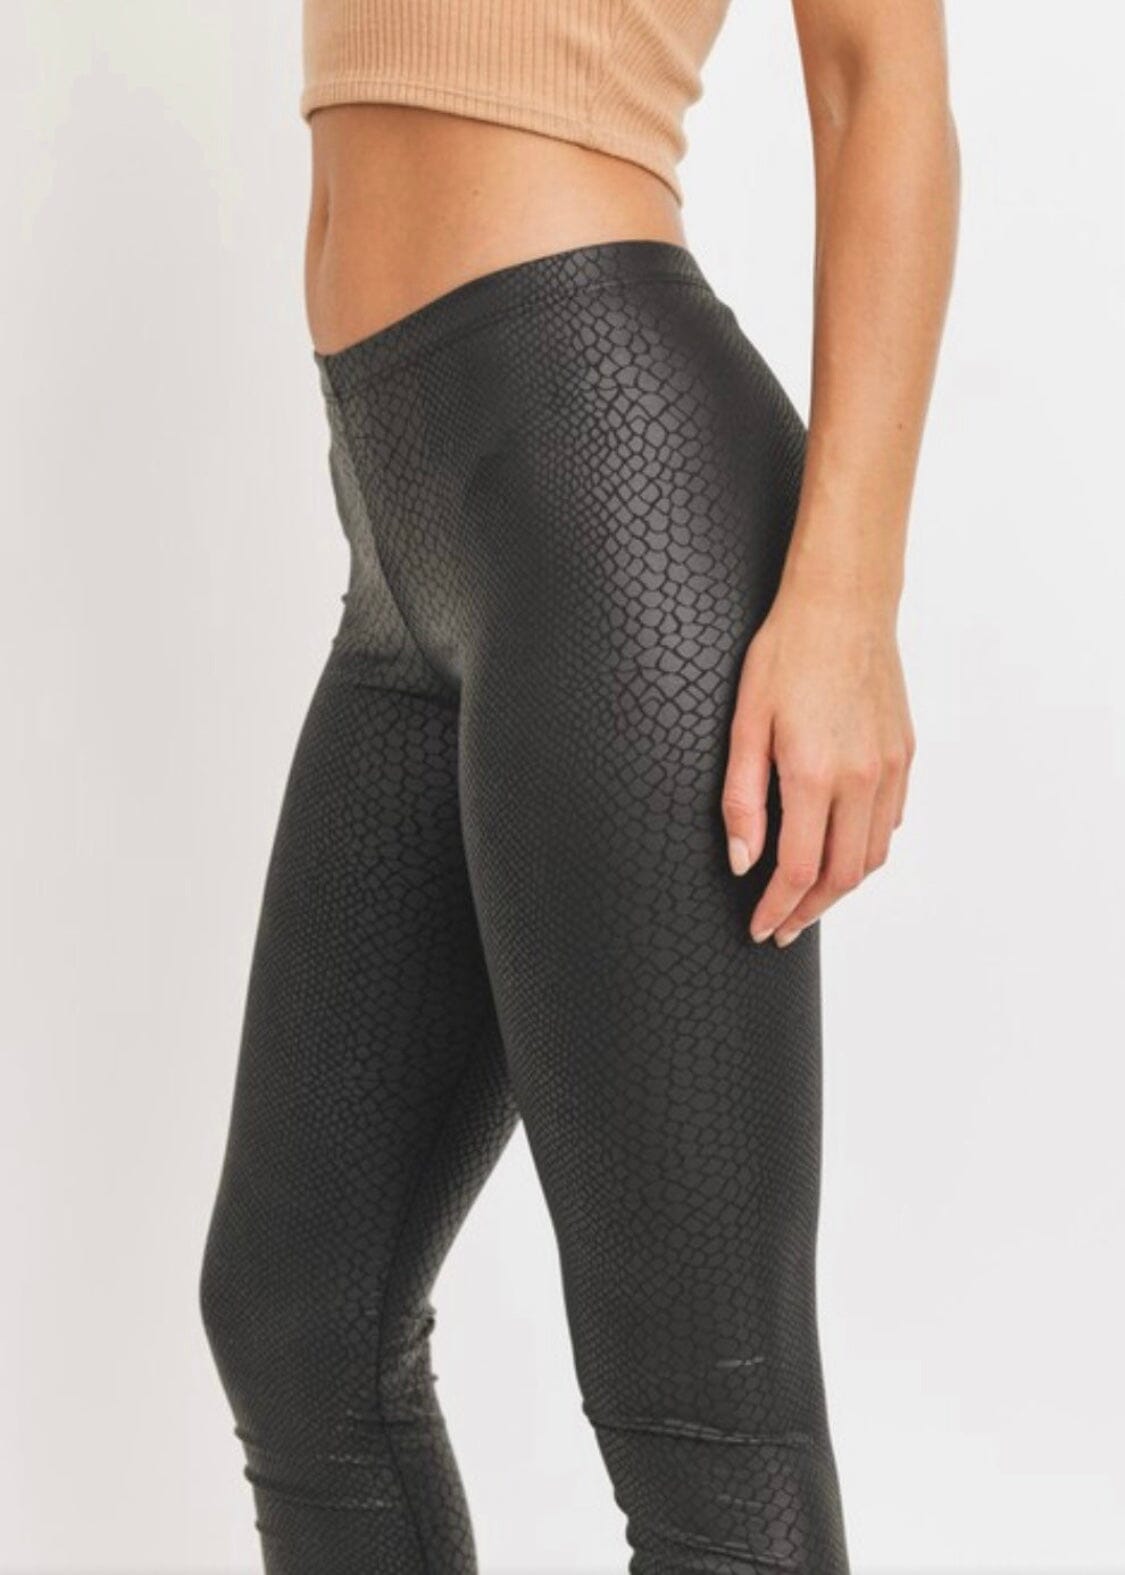 Womens Faux Leather Leggings Black High Waist Pants Snake Pattern : BidBud